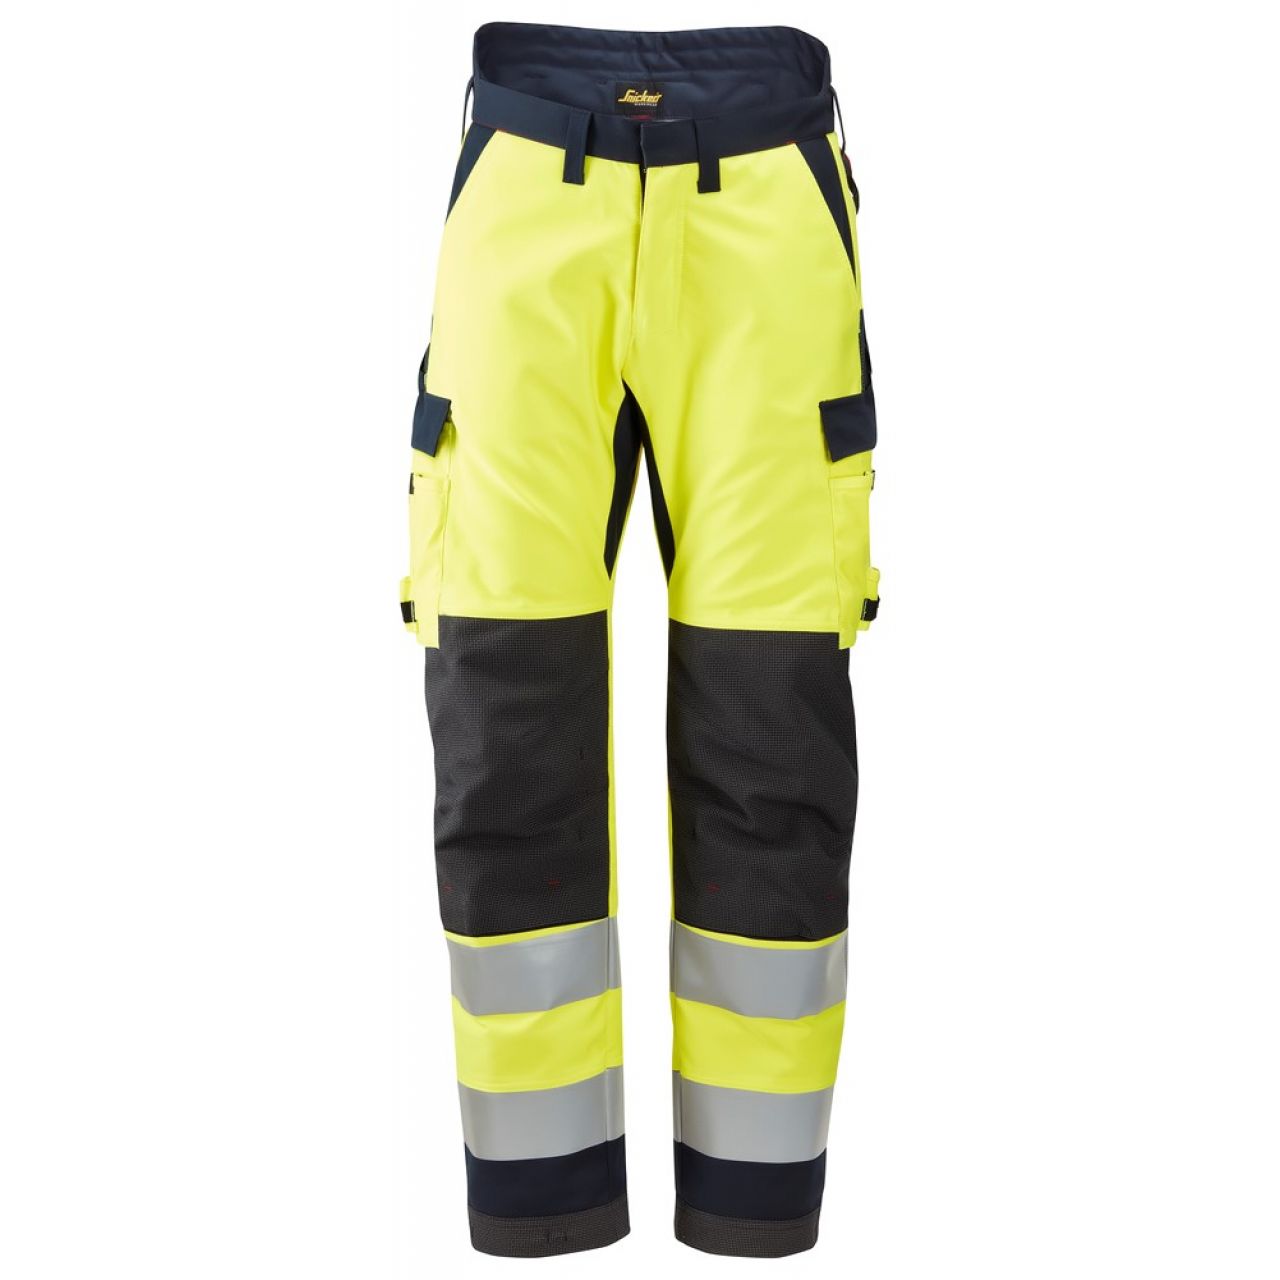 6663 Pantalones largos de trabajo aislantes 37.5® de alta visibiidad clase 2 ProtecWork amarillo-azul marino talla 156